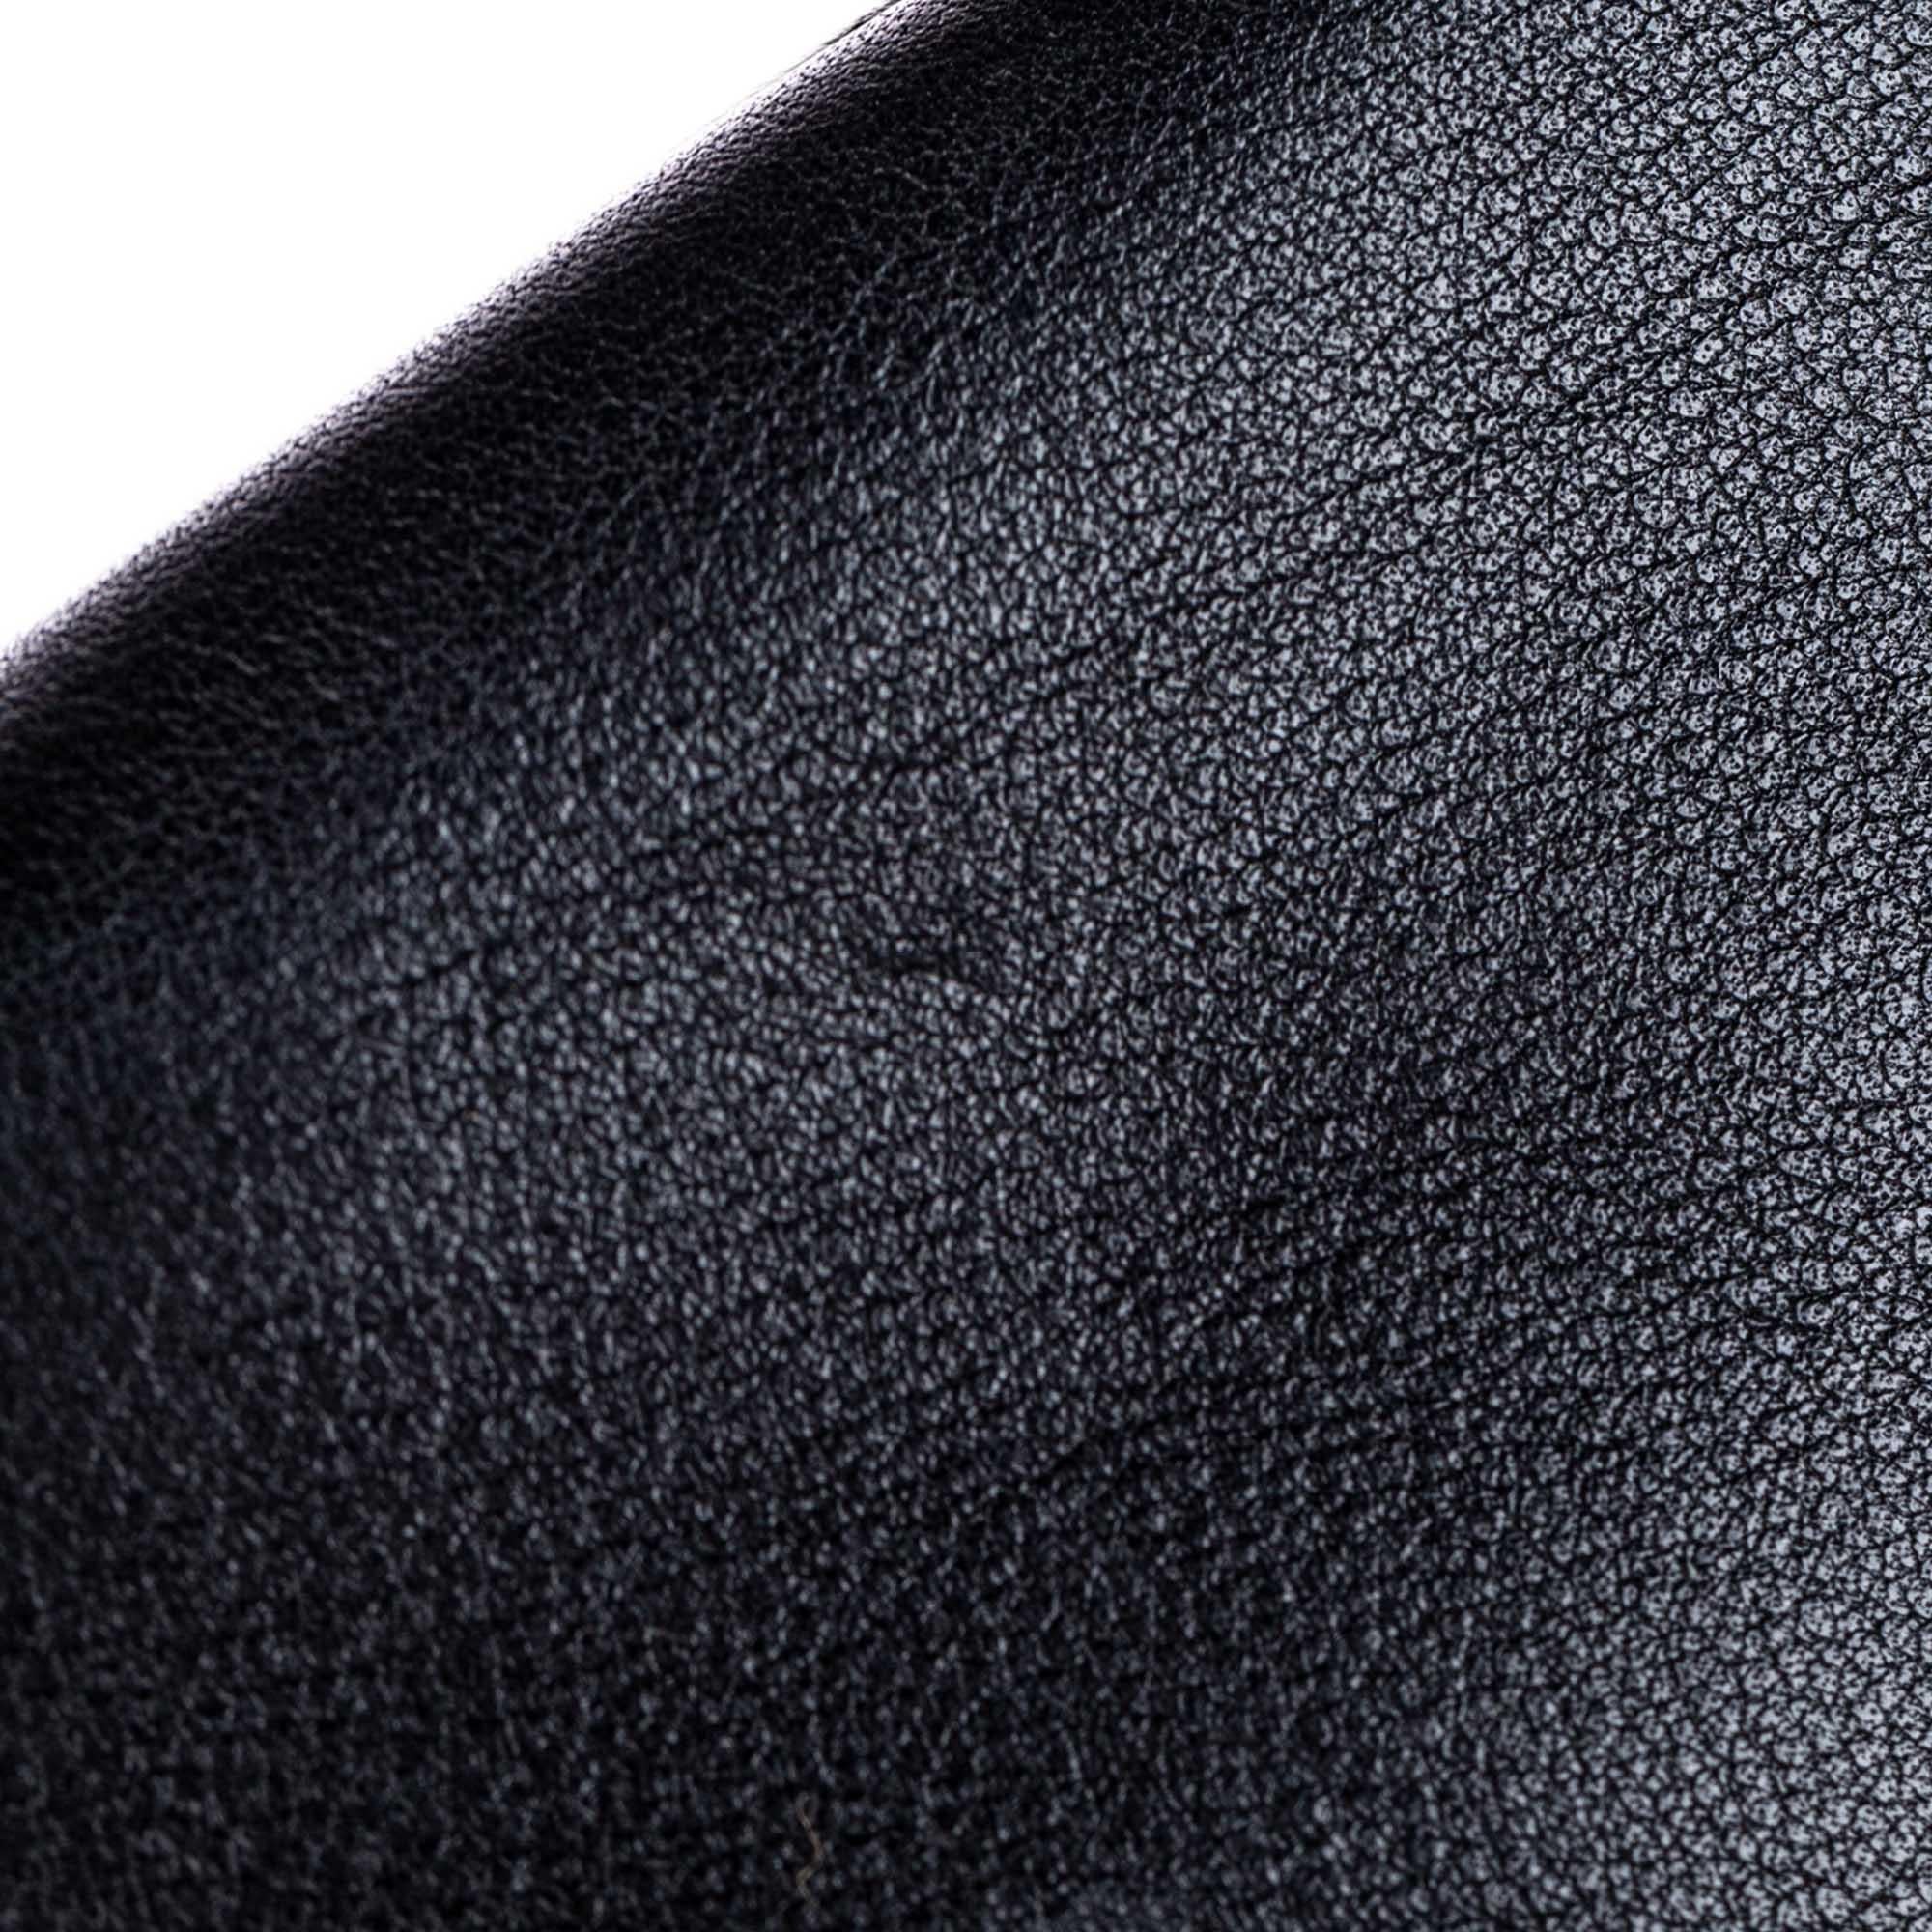 Vintage Authentic Gucci Black Leather Shoulder Bag Italy MEDIUM  For Sale 4